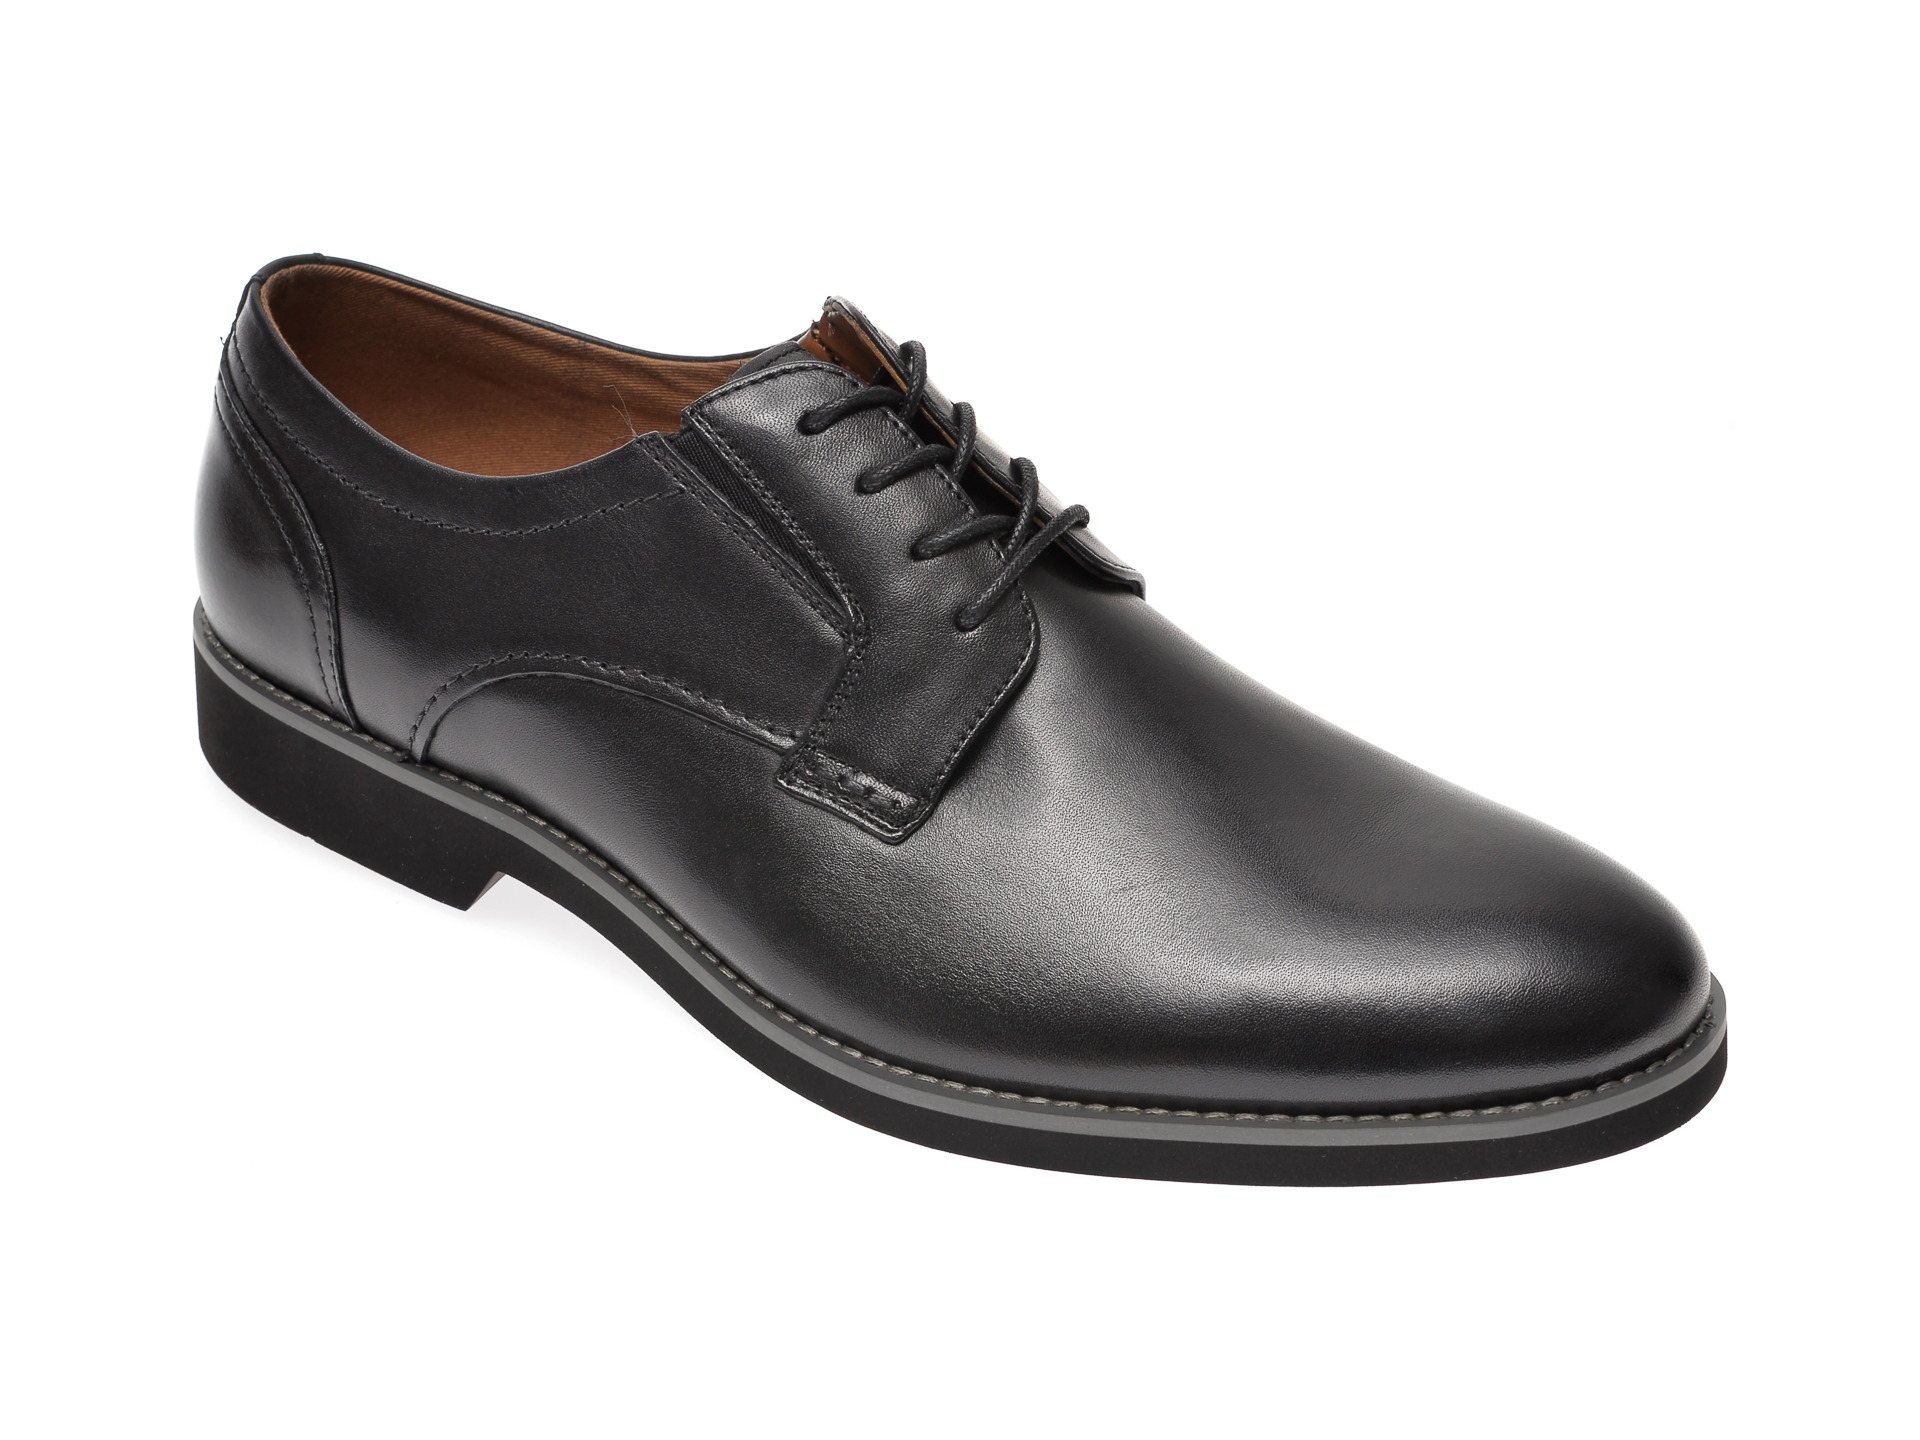 Pantofi ALDO negri, Rorelind001, din piele naturala imagine otter.ro 2021